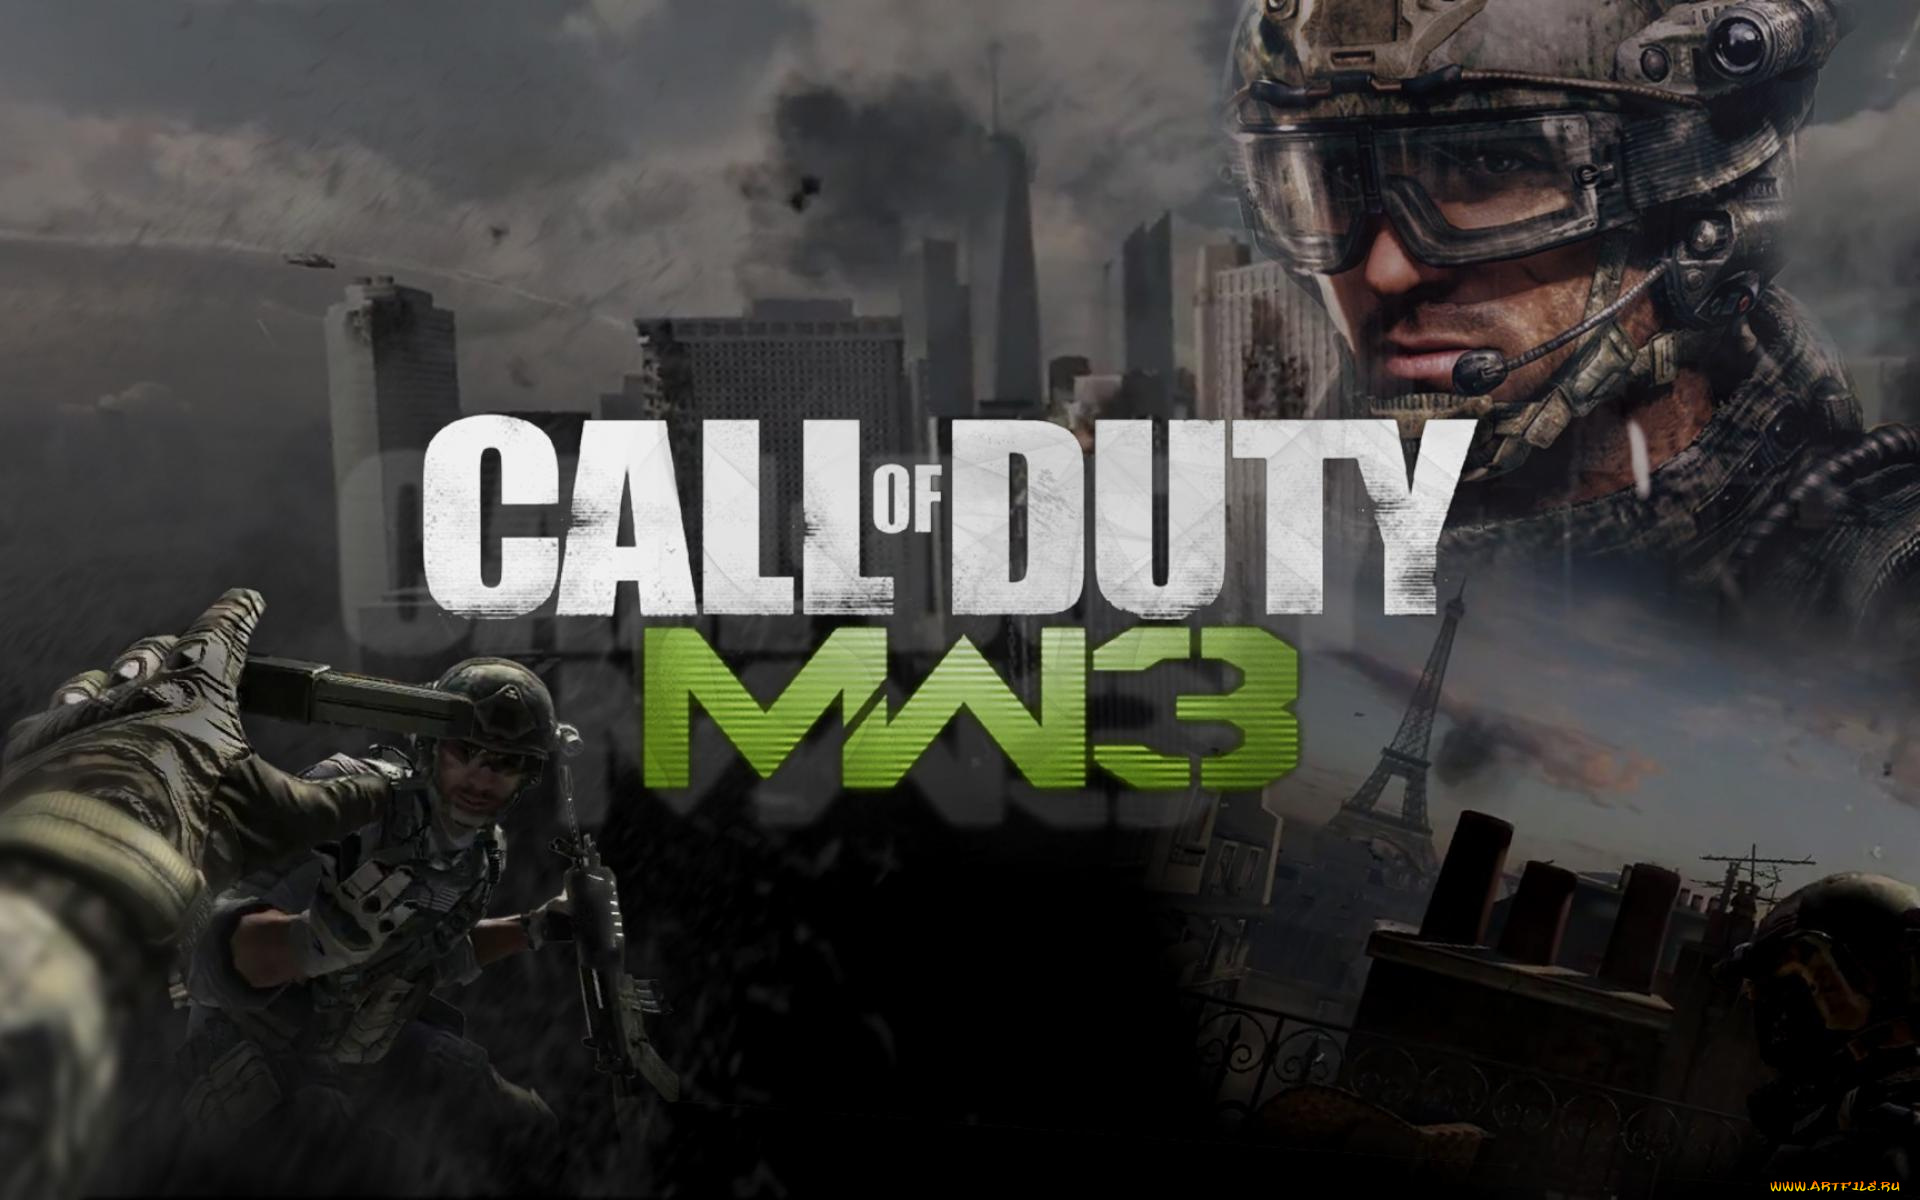 Call of duty плей маркет. Call of Duty мв3. Modern Warfare 3. Call of Duty mw3 обои. Call of Duty Modern варфаер 3.